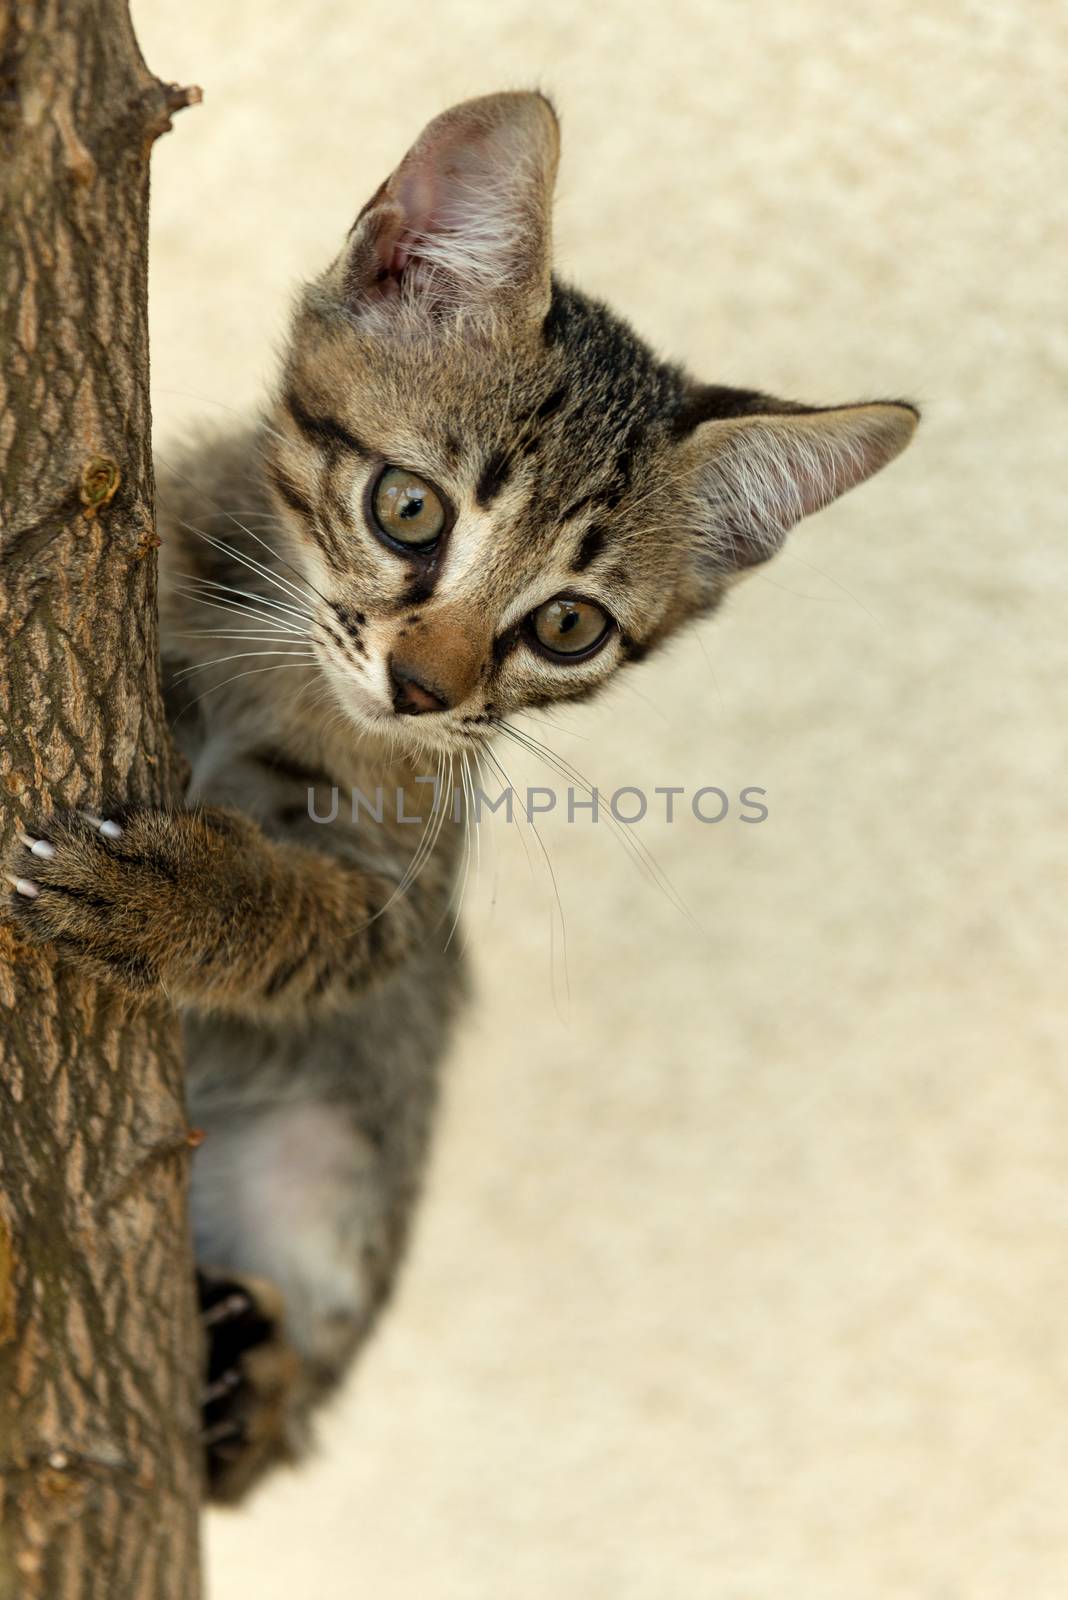 Climb cat by jordygraph